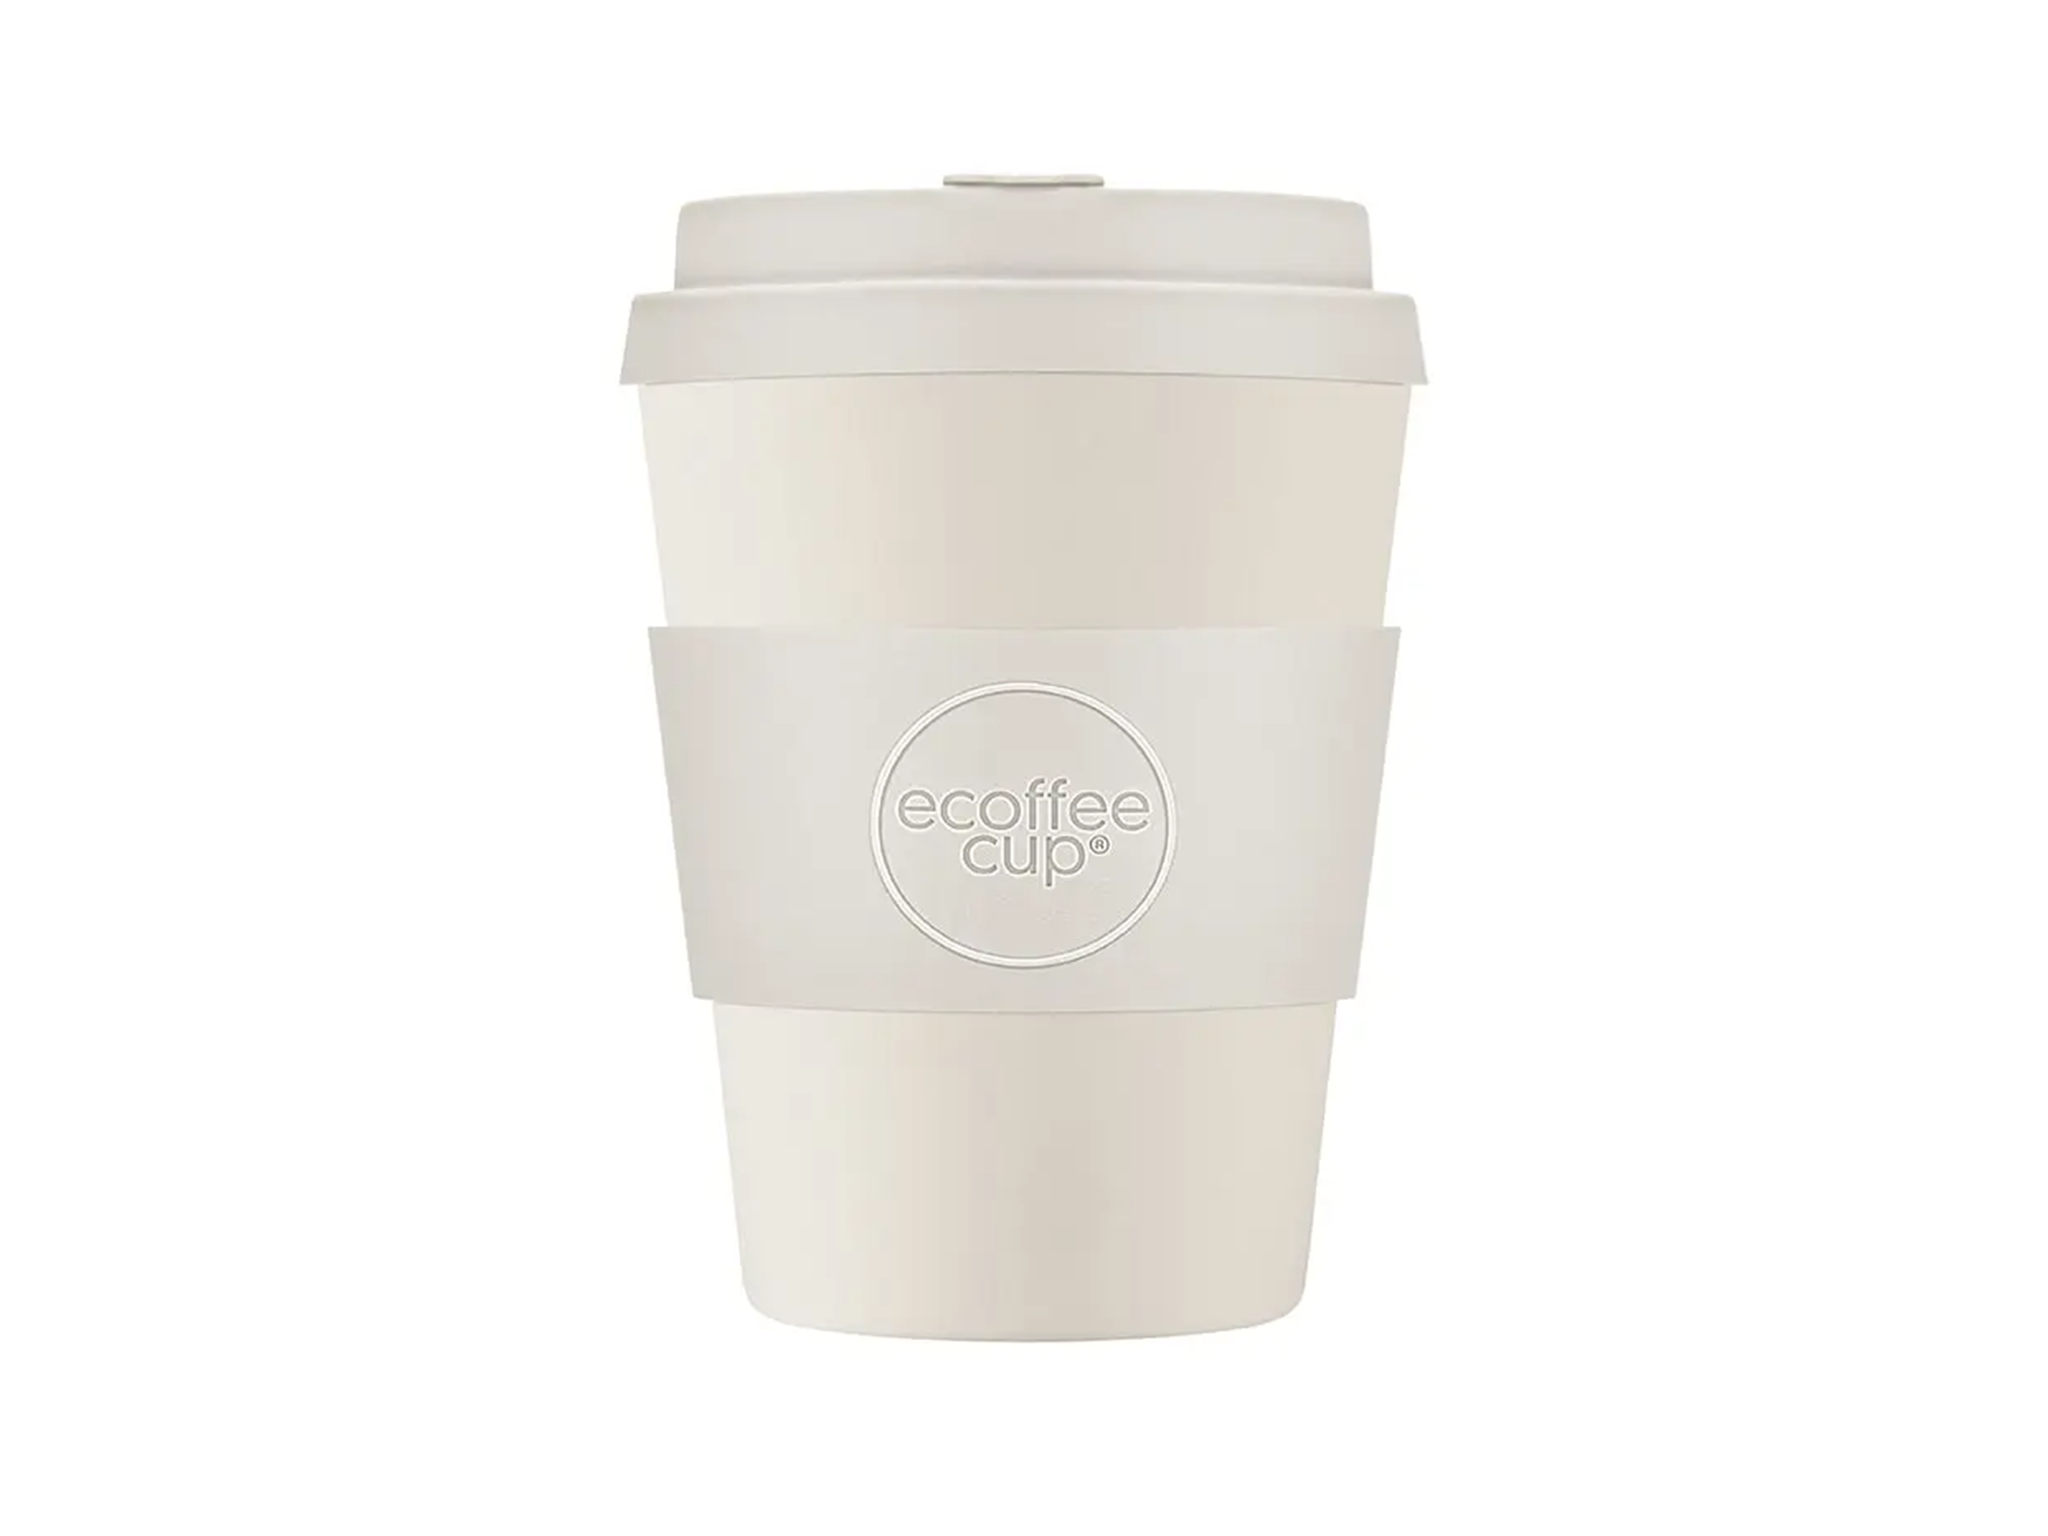 Ecoffee cup waicara